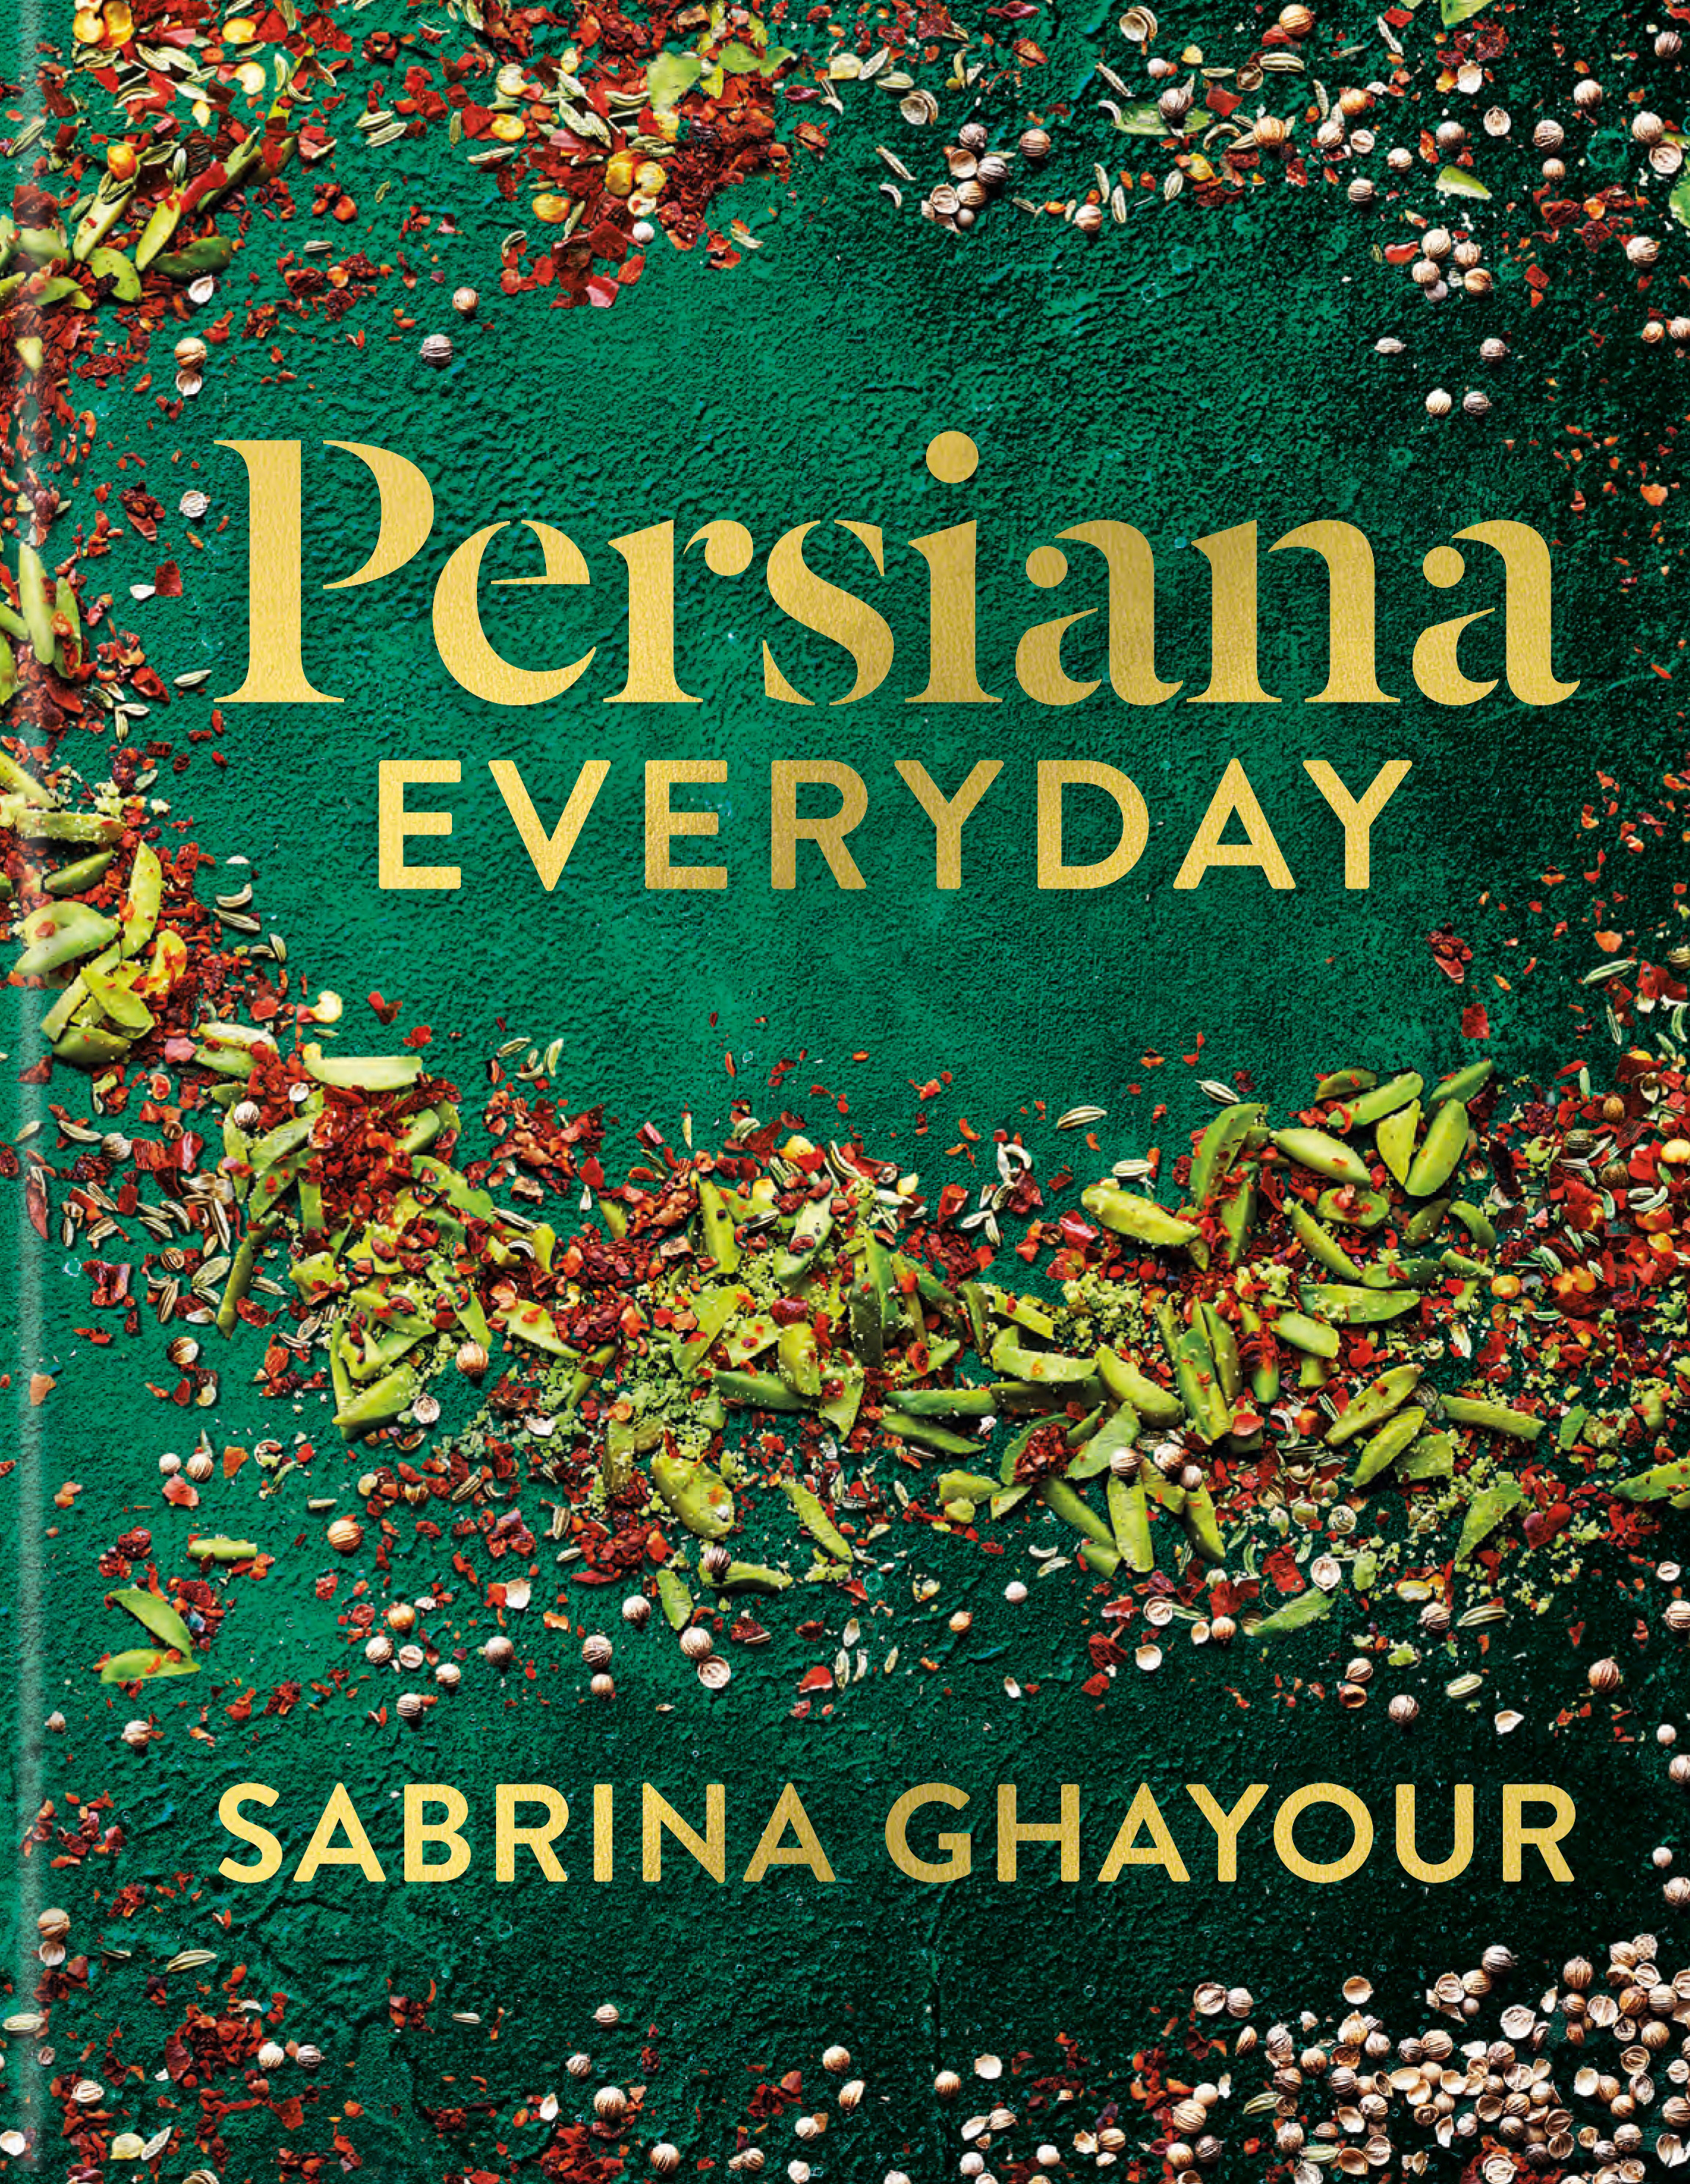 Persiana Everyday by Sabrina Ghayour